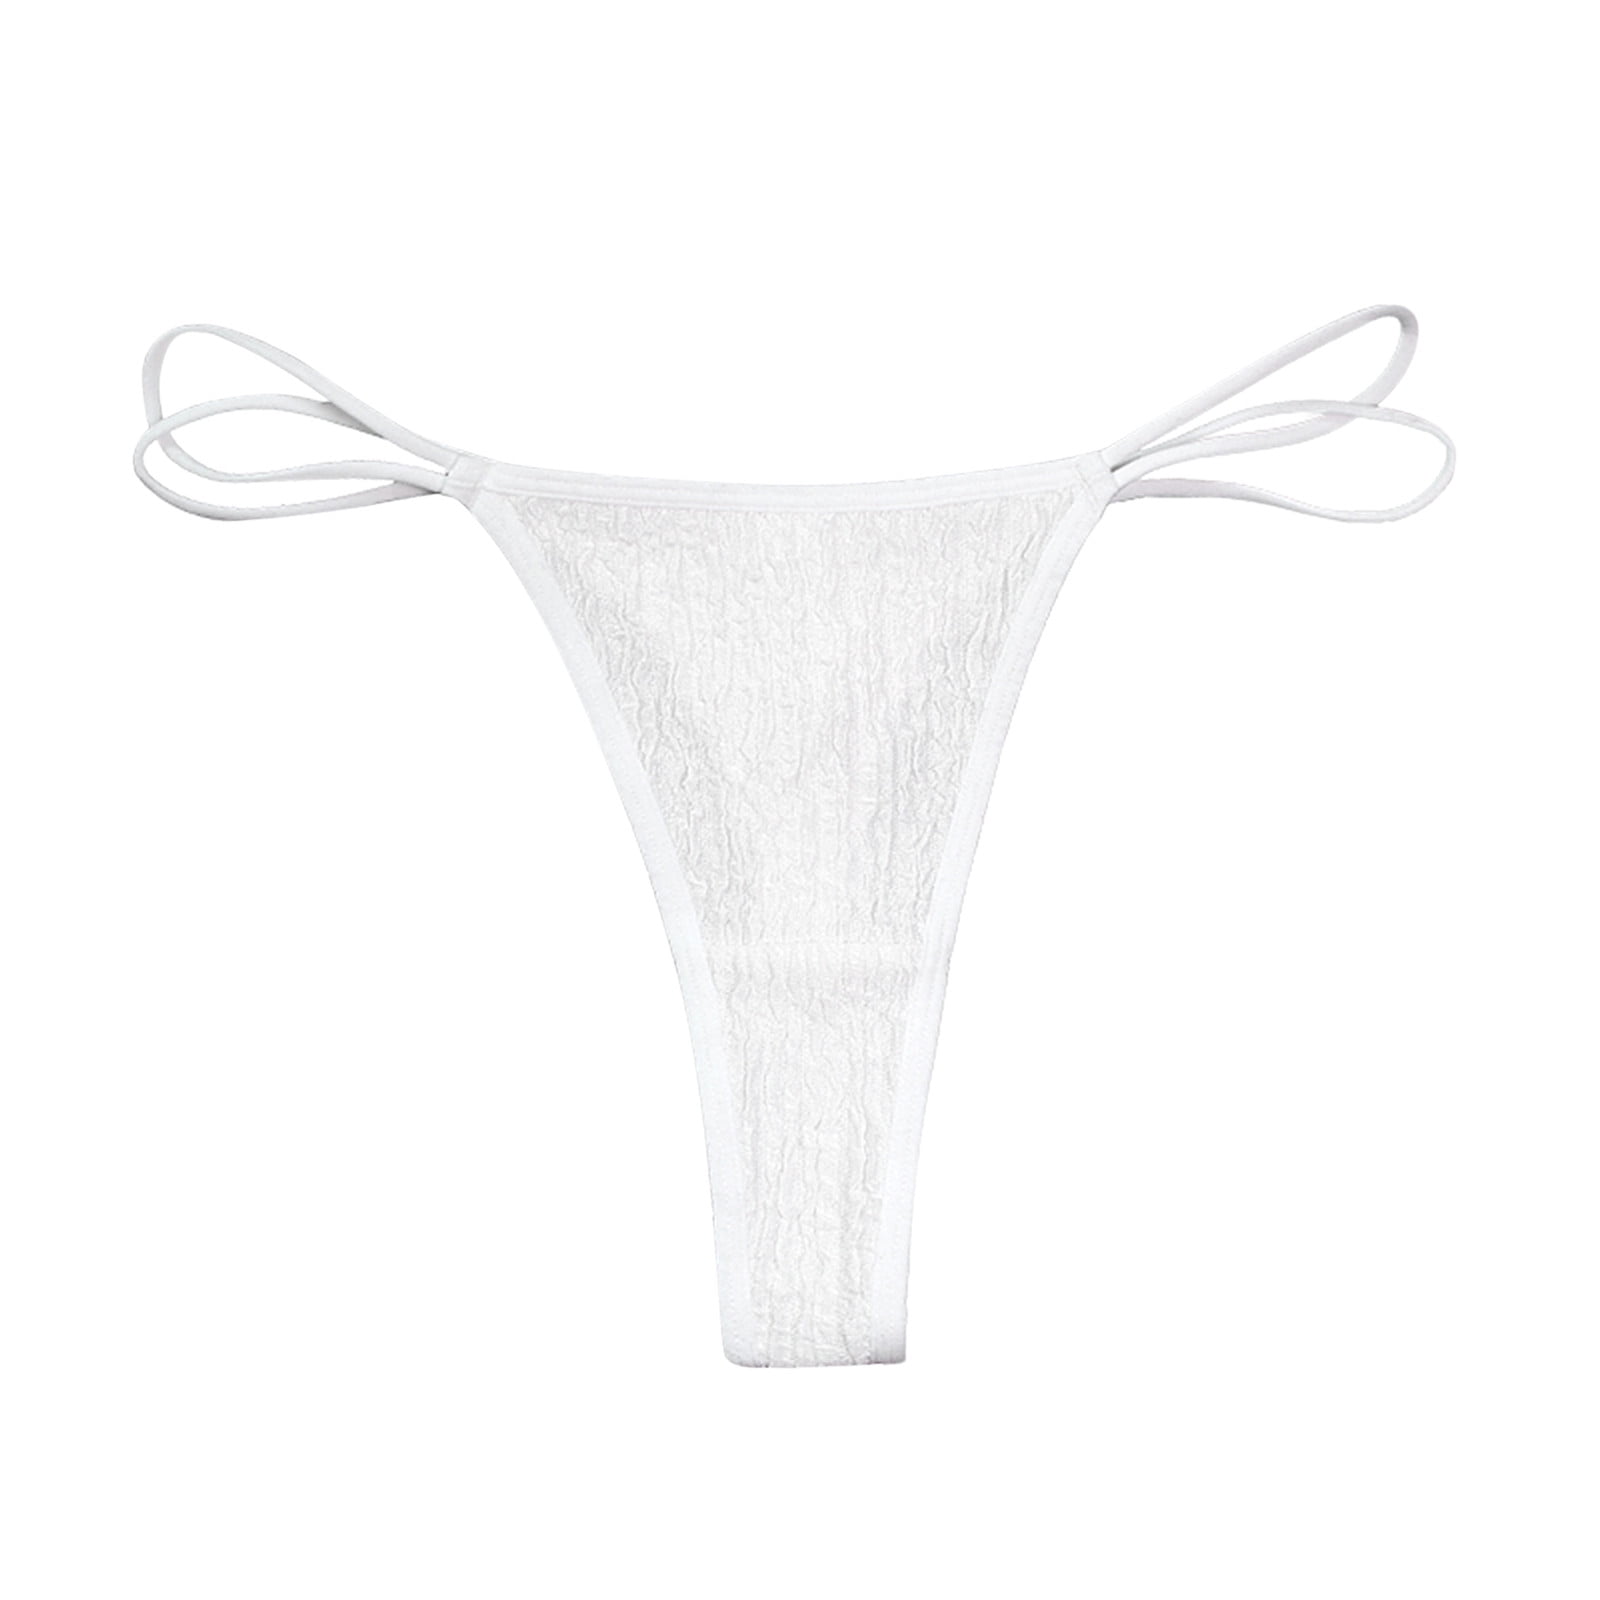 Cotton Underwear for Women Bikini Panty Soft Full Back Coverage